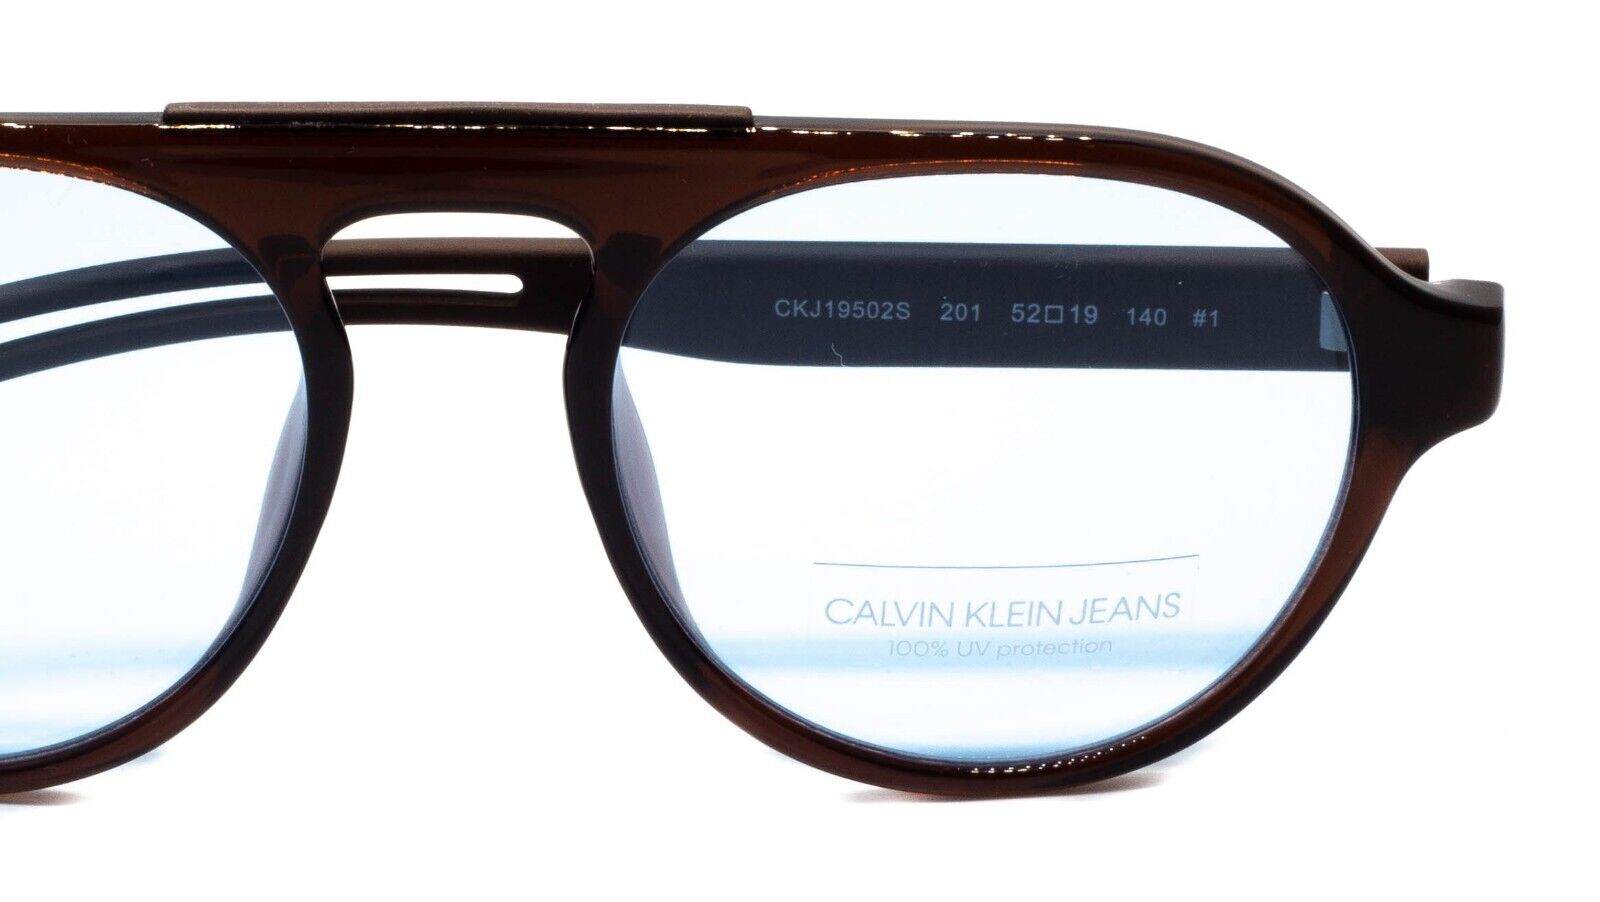 CALVIN KLEIN JEANS CKJ 19502S 201 52mm #1 Sunglasses Shades Eyewear Frames  - New - GGV Eyewear